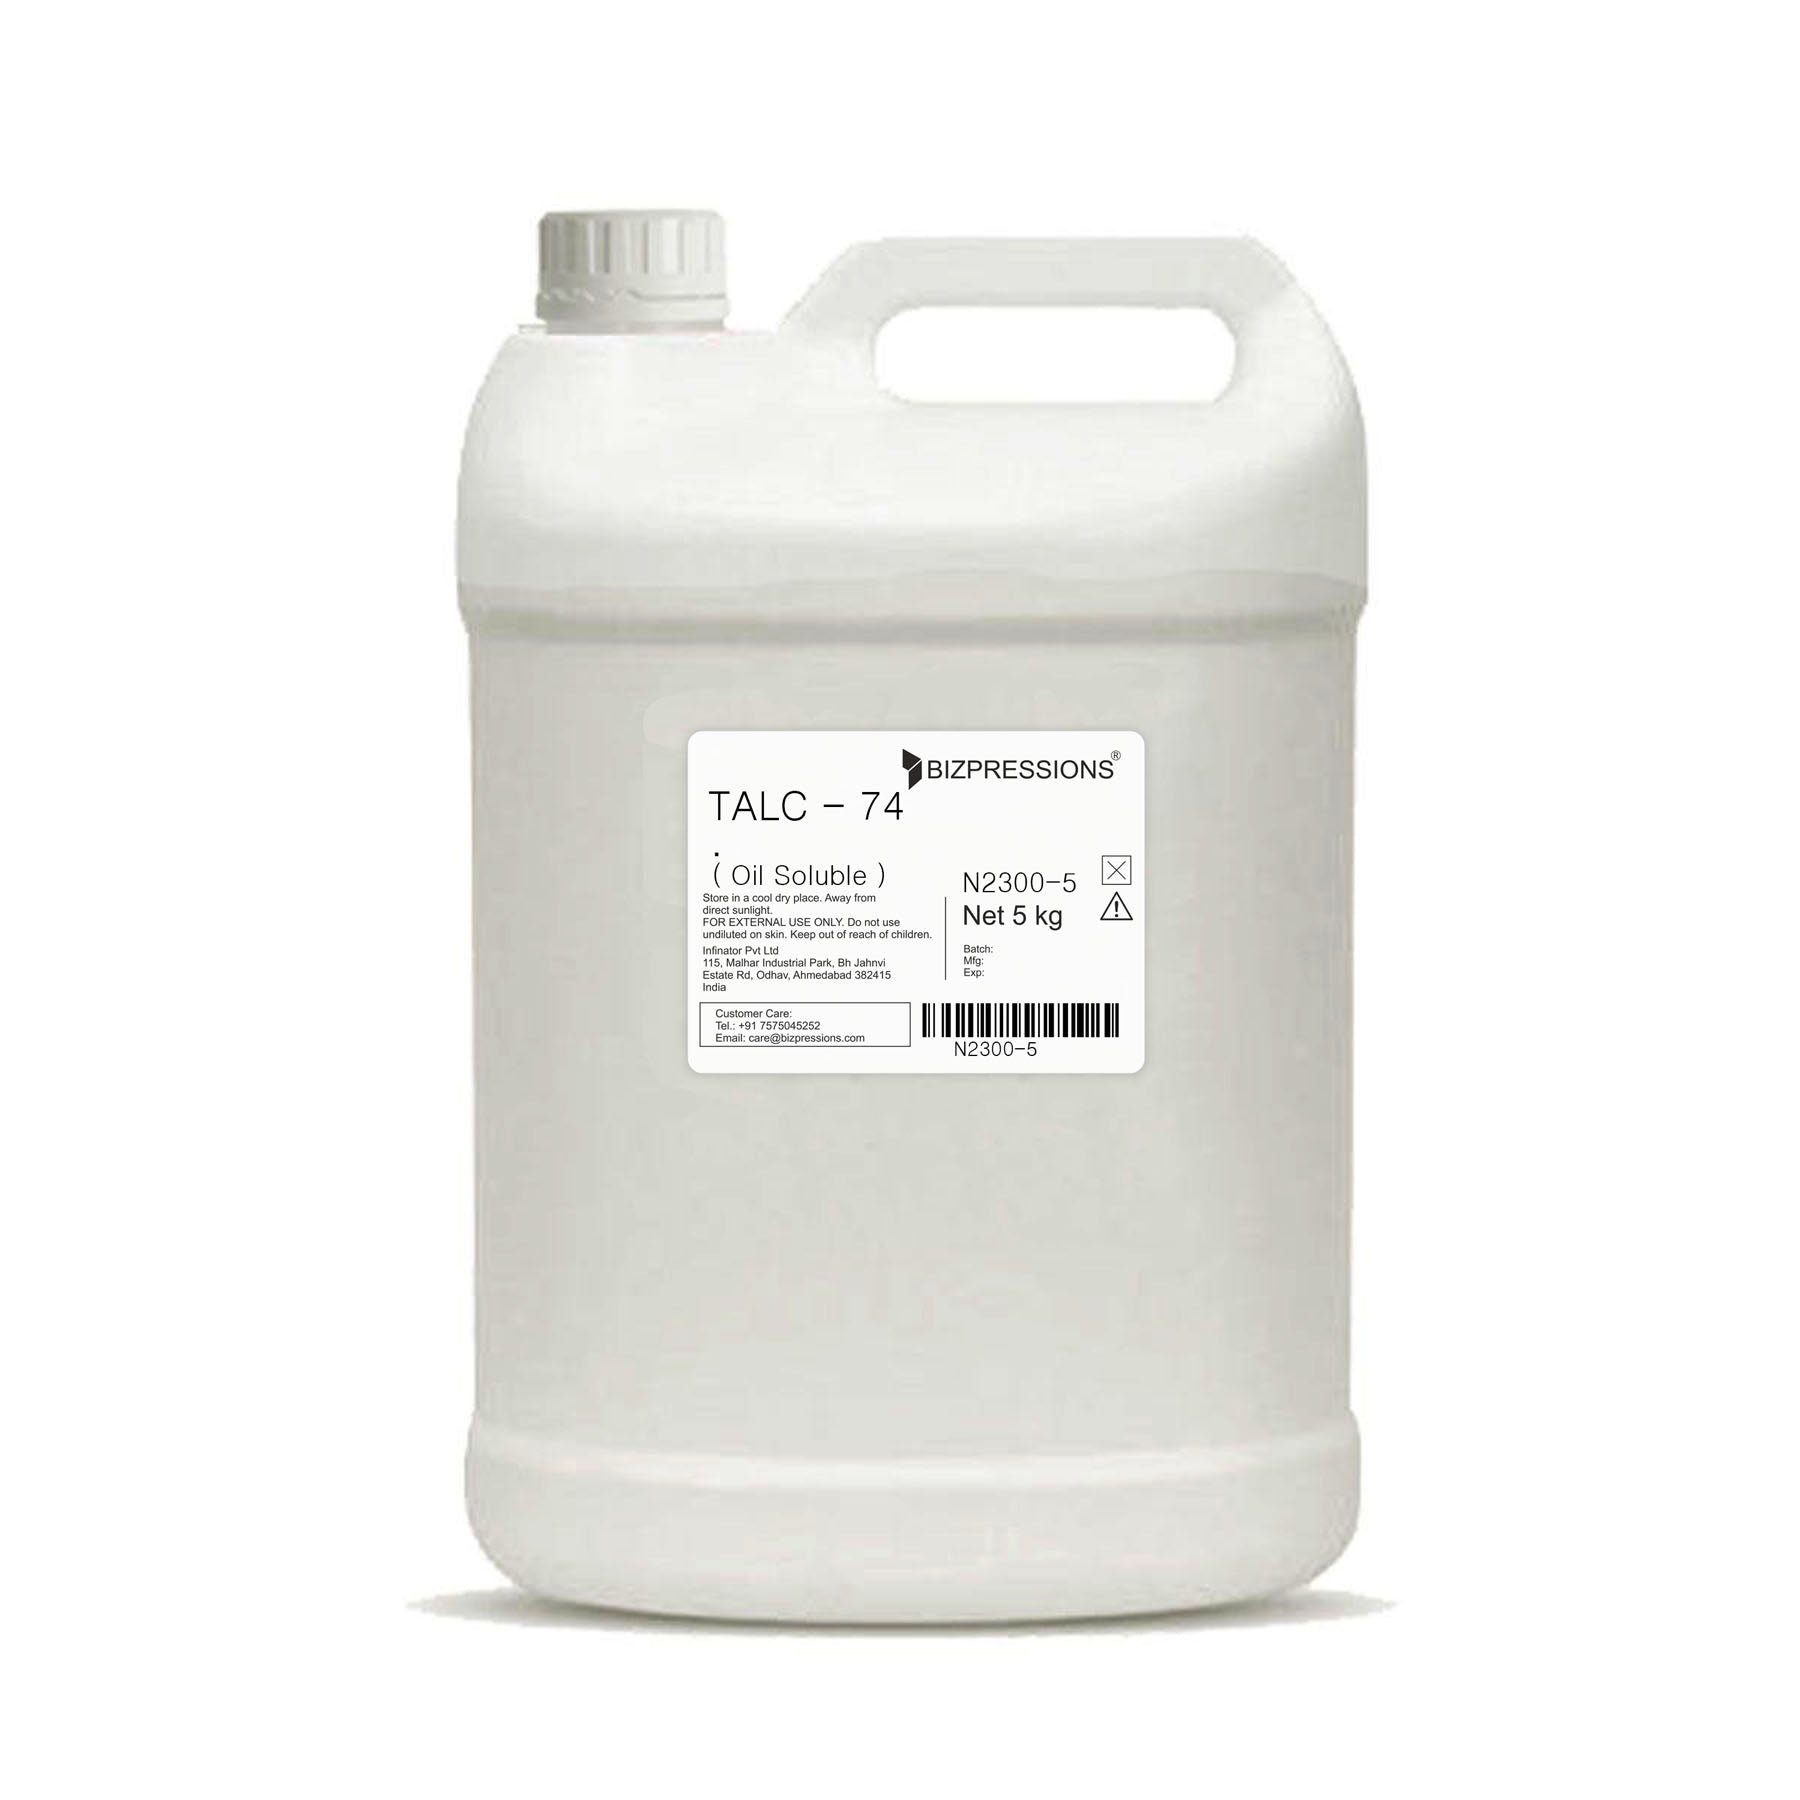 TALC - 74 - Fragrance ( Oil Soluble ) - 5 kg